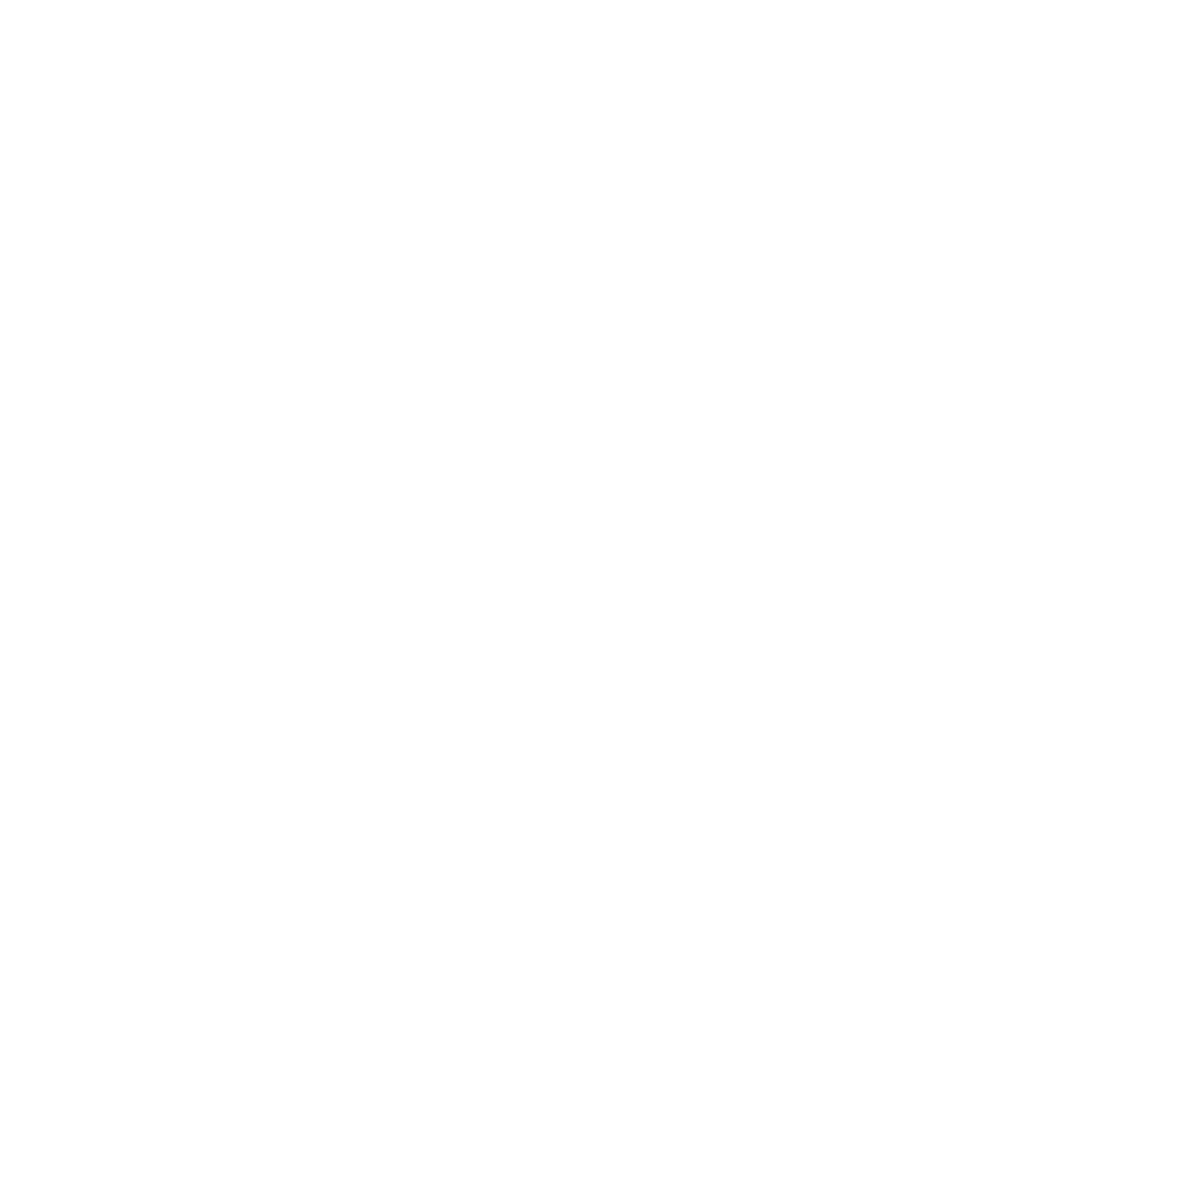 spider Agency